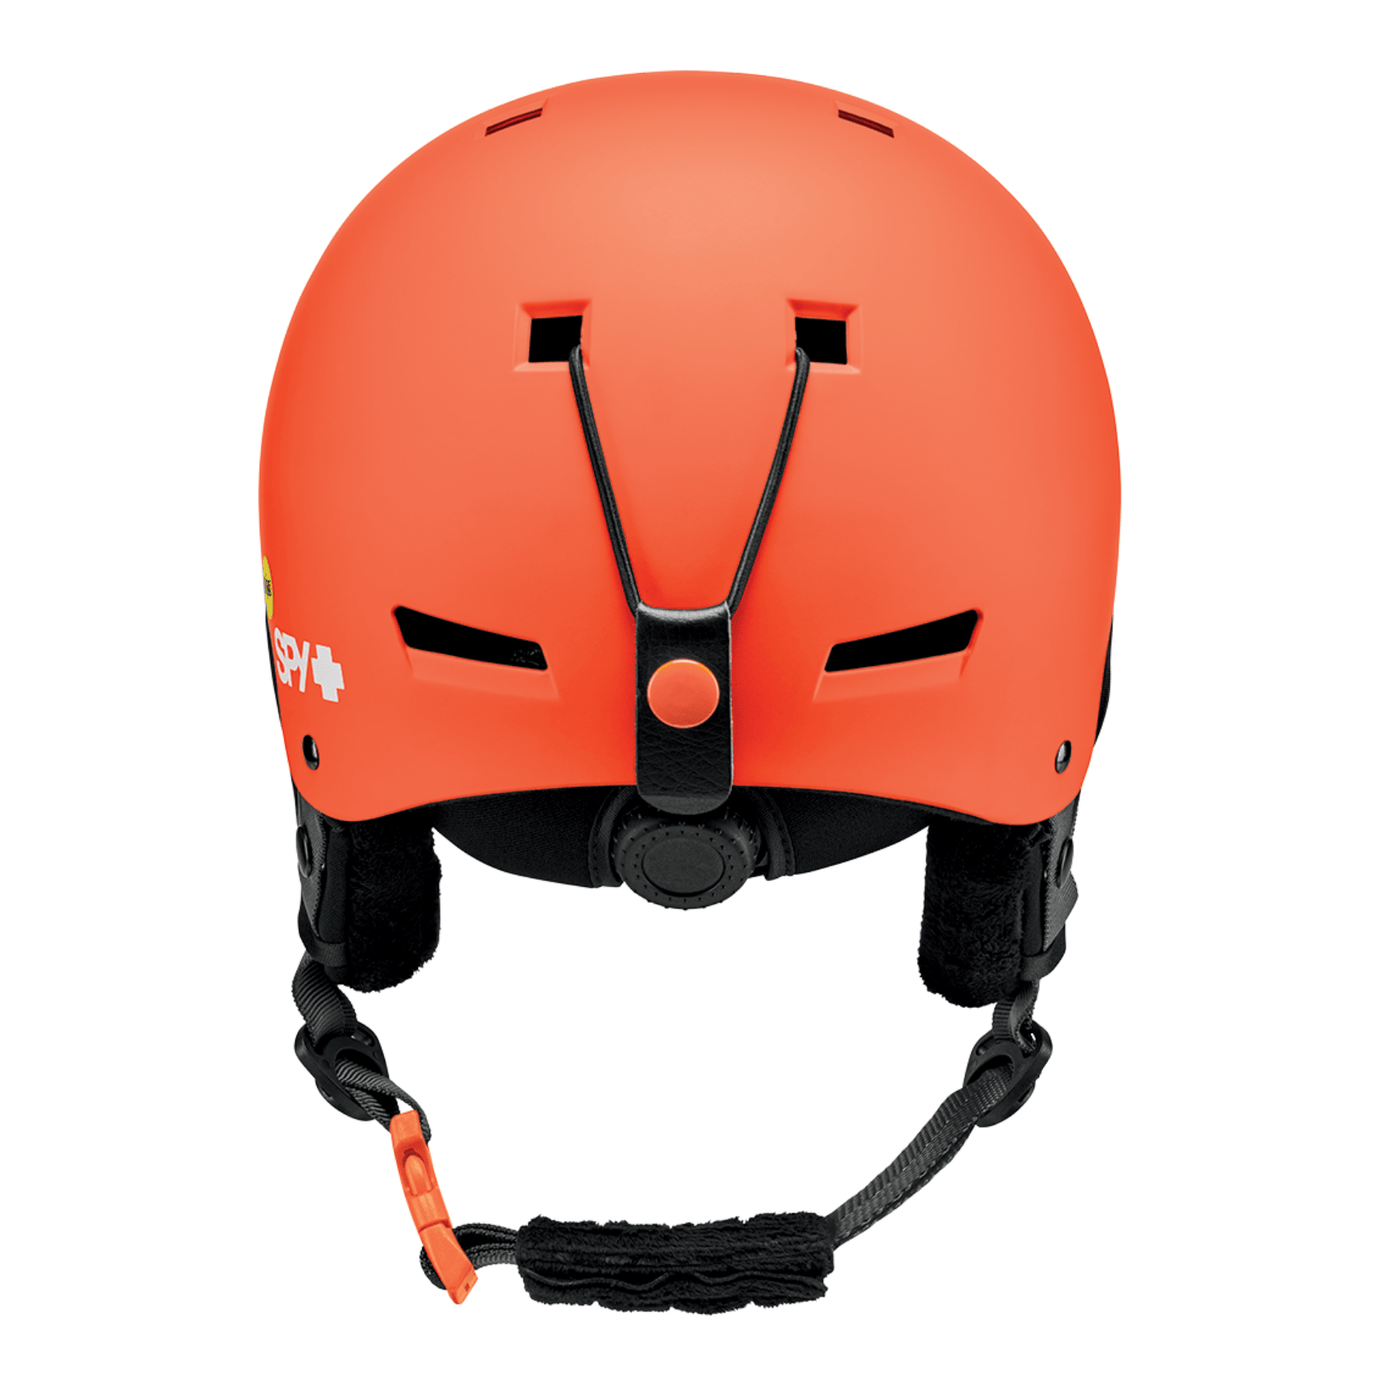 SPY Galactic MIPS Snow Helmet - Matte Orange